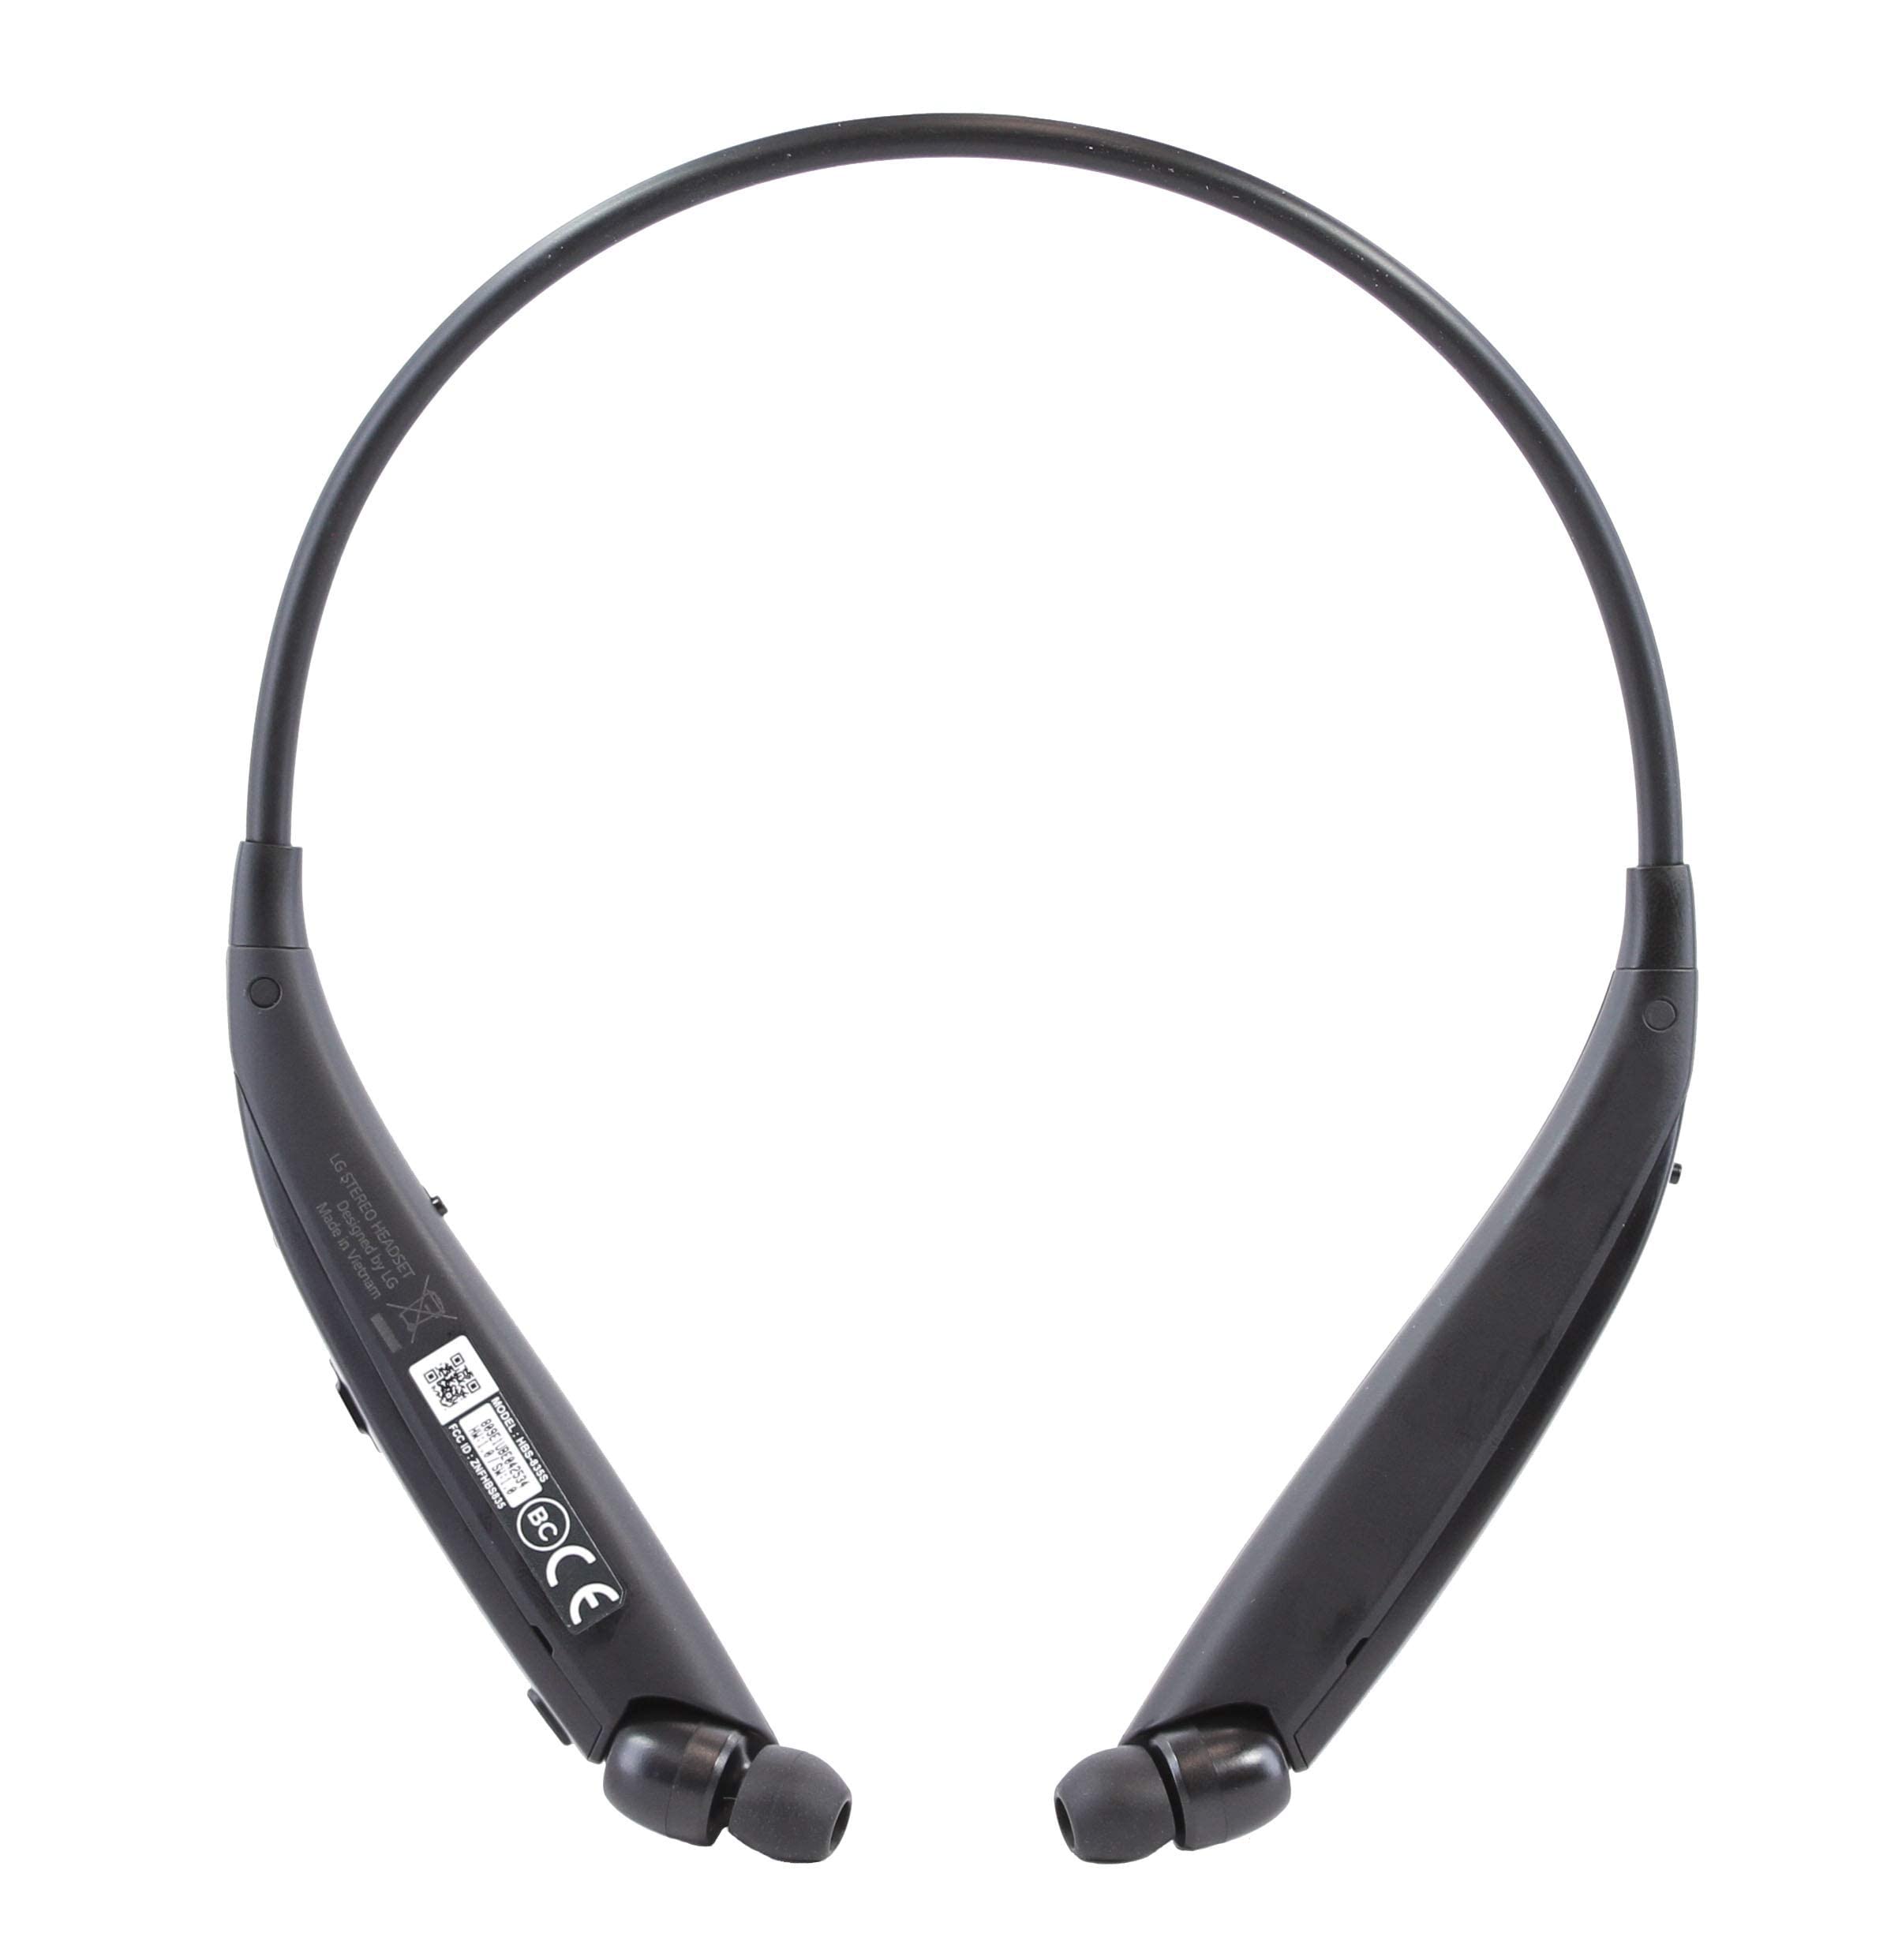 LG TONE Ultra SE Bluetooth Wireless Stereo Headset HBS-835S - Serial Black - Renewed